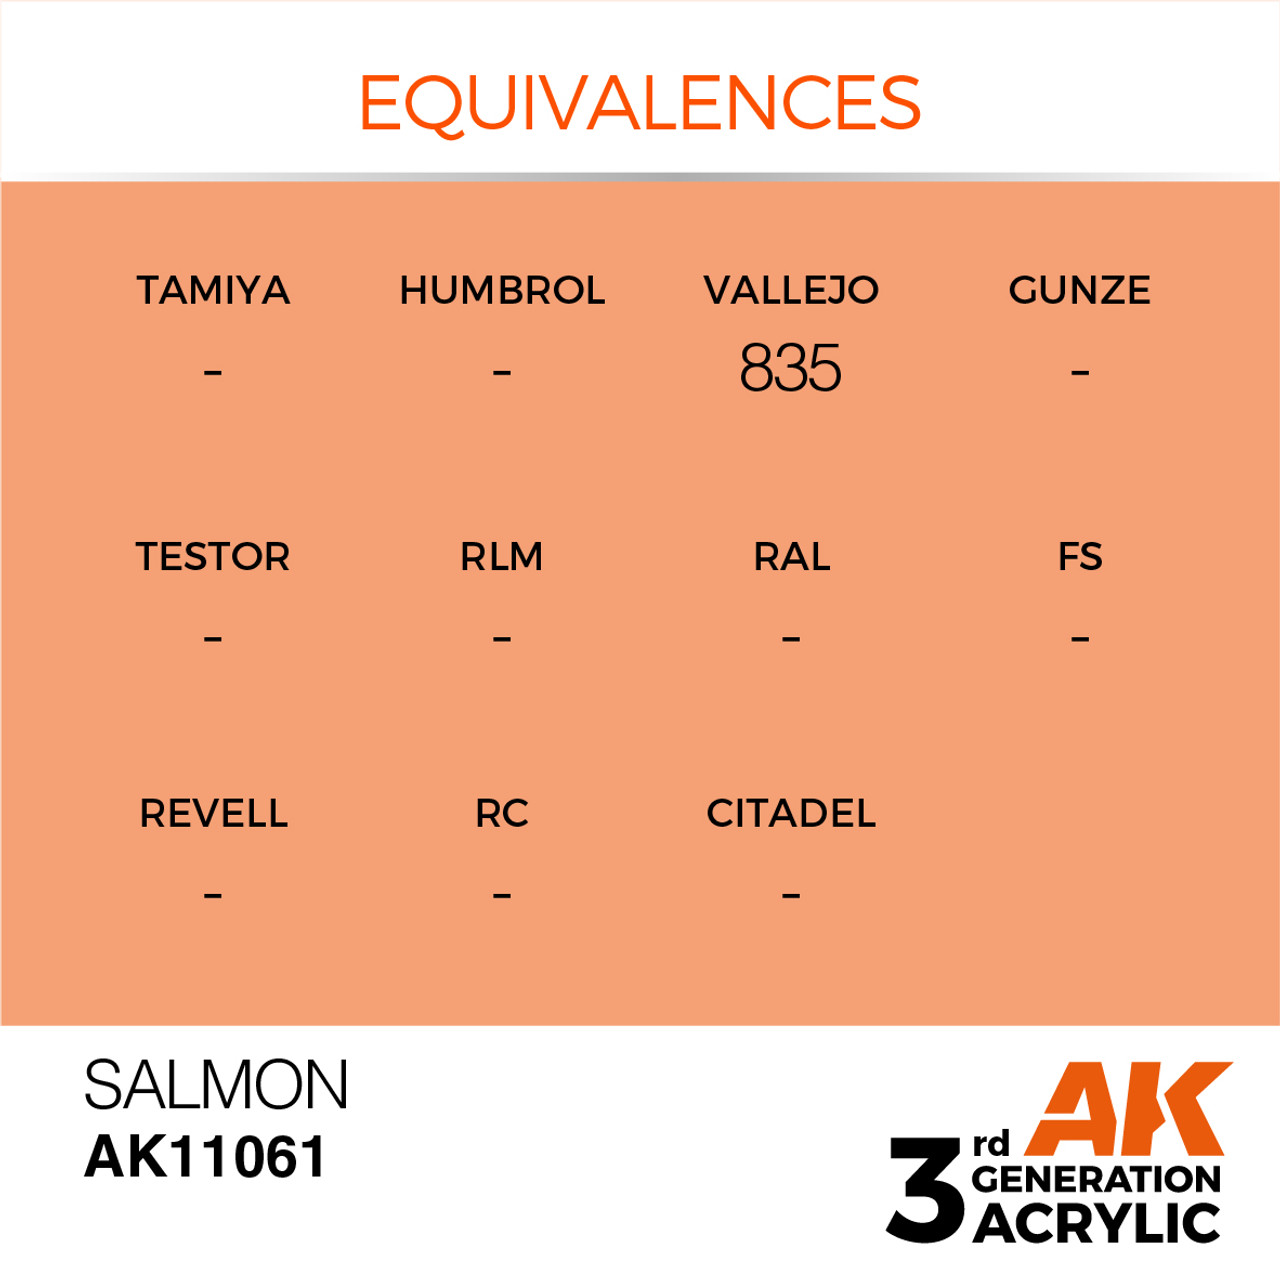 AK Interactive 3G Acrylic Salmon 17ml